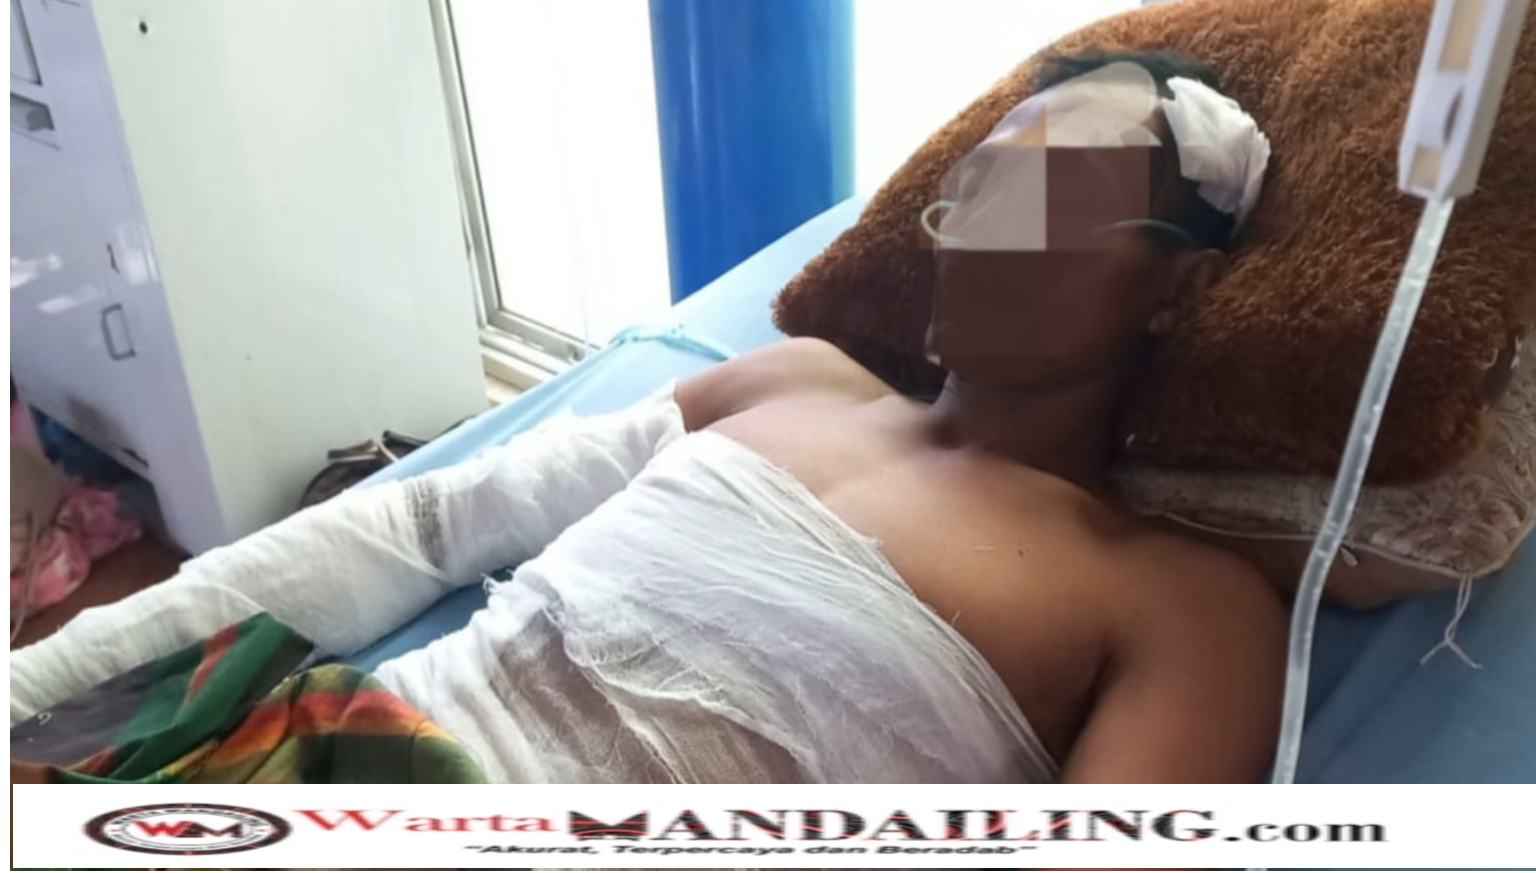 seorang tukang bangunan tersengat listrik saat bekerja, kini korban sedang dirawat di RSUD Panyabungan, fhoto : istimewa.